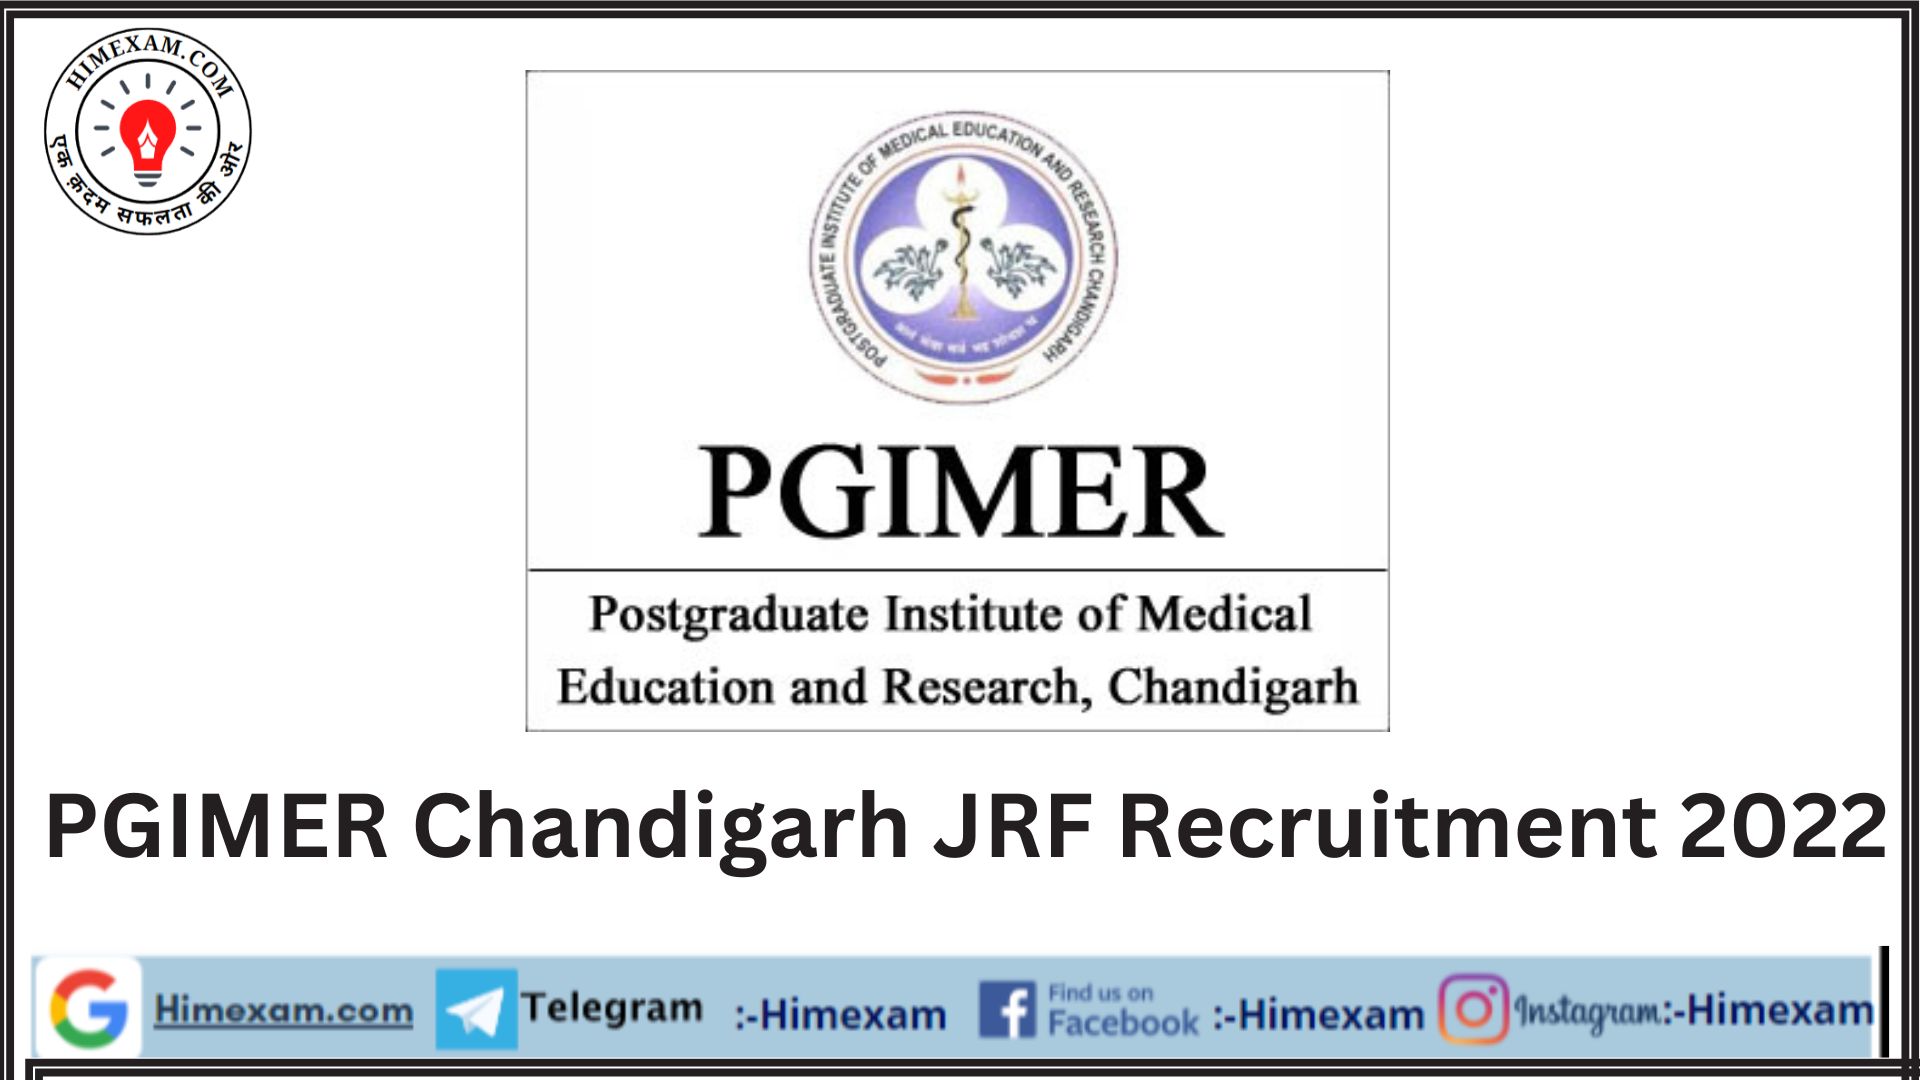 PGIMER Chandigarh JRF Recruitment 2022